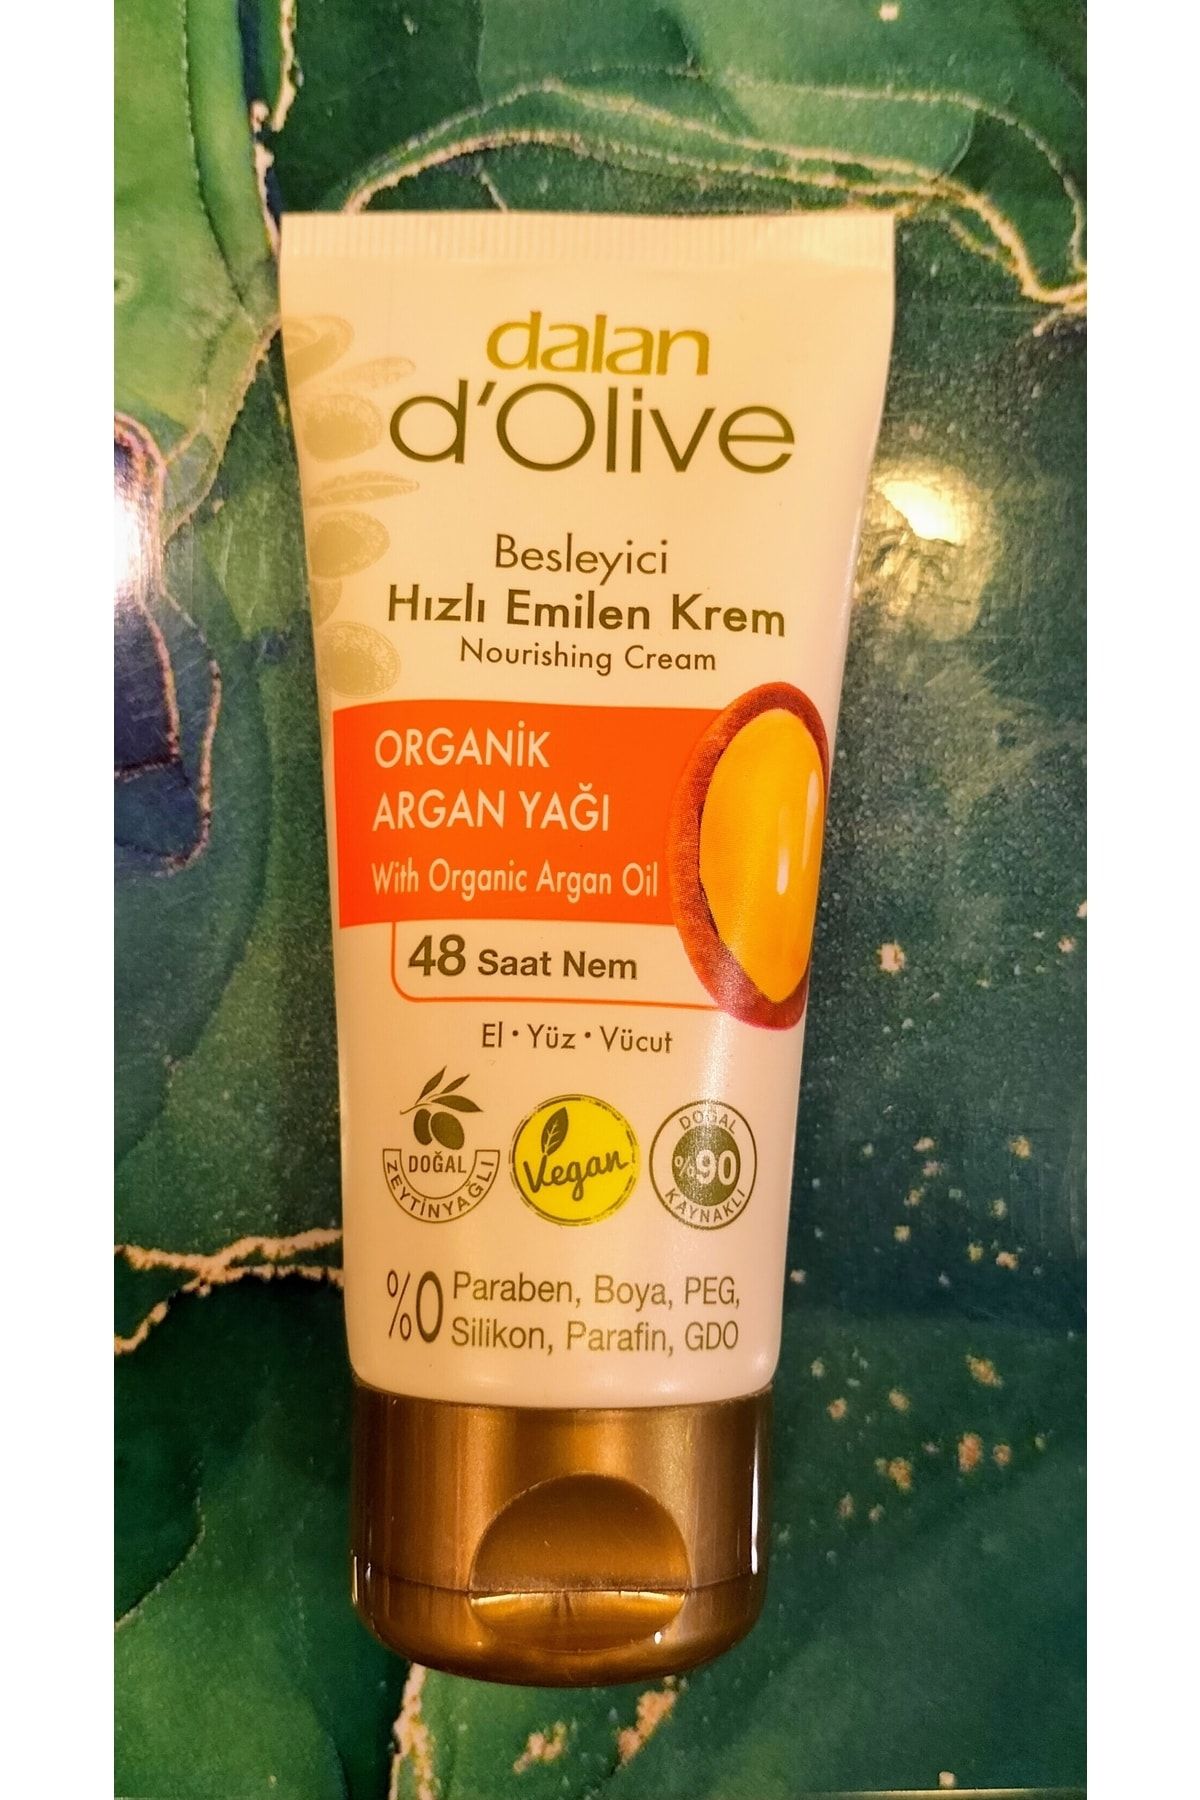 Dalan D'olive Organik Argan Yağı Vücut Kremi 60 Ml